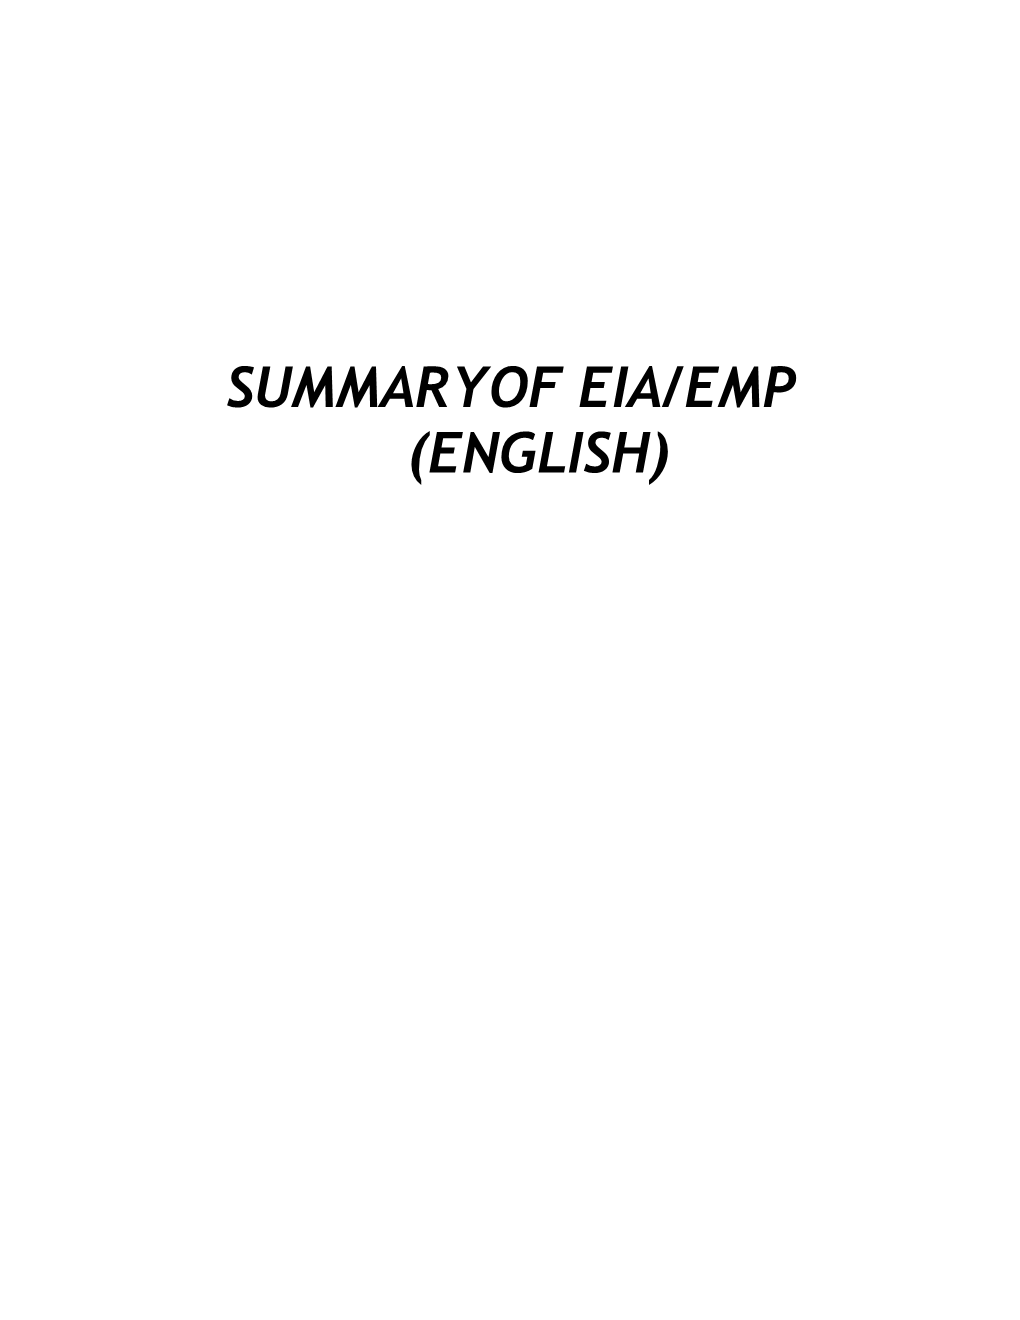 Summaryof Eia/Emp (English) Summary